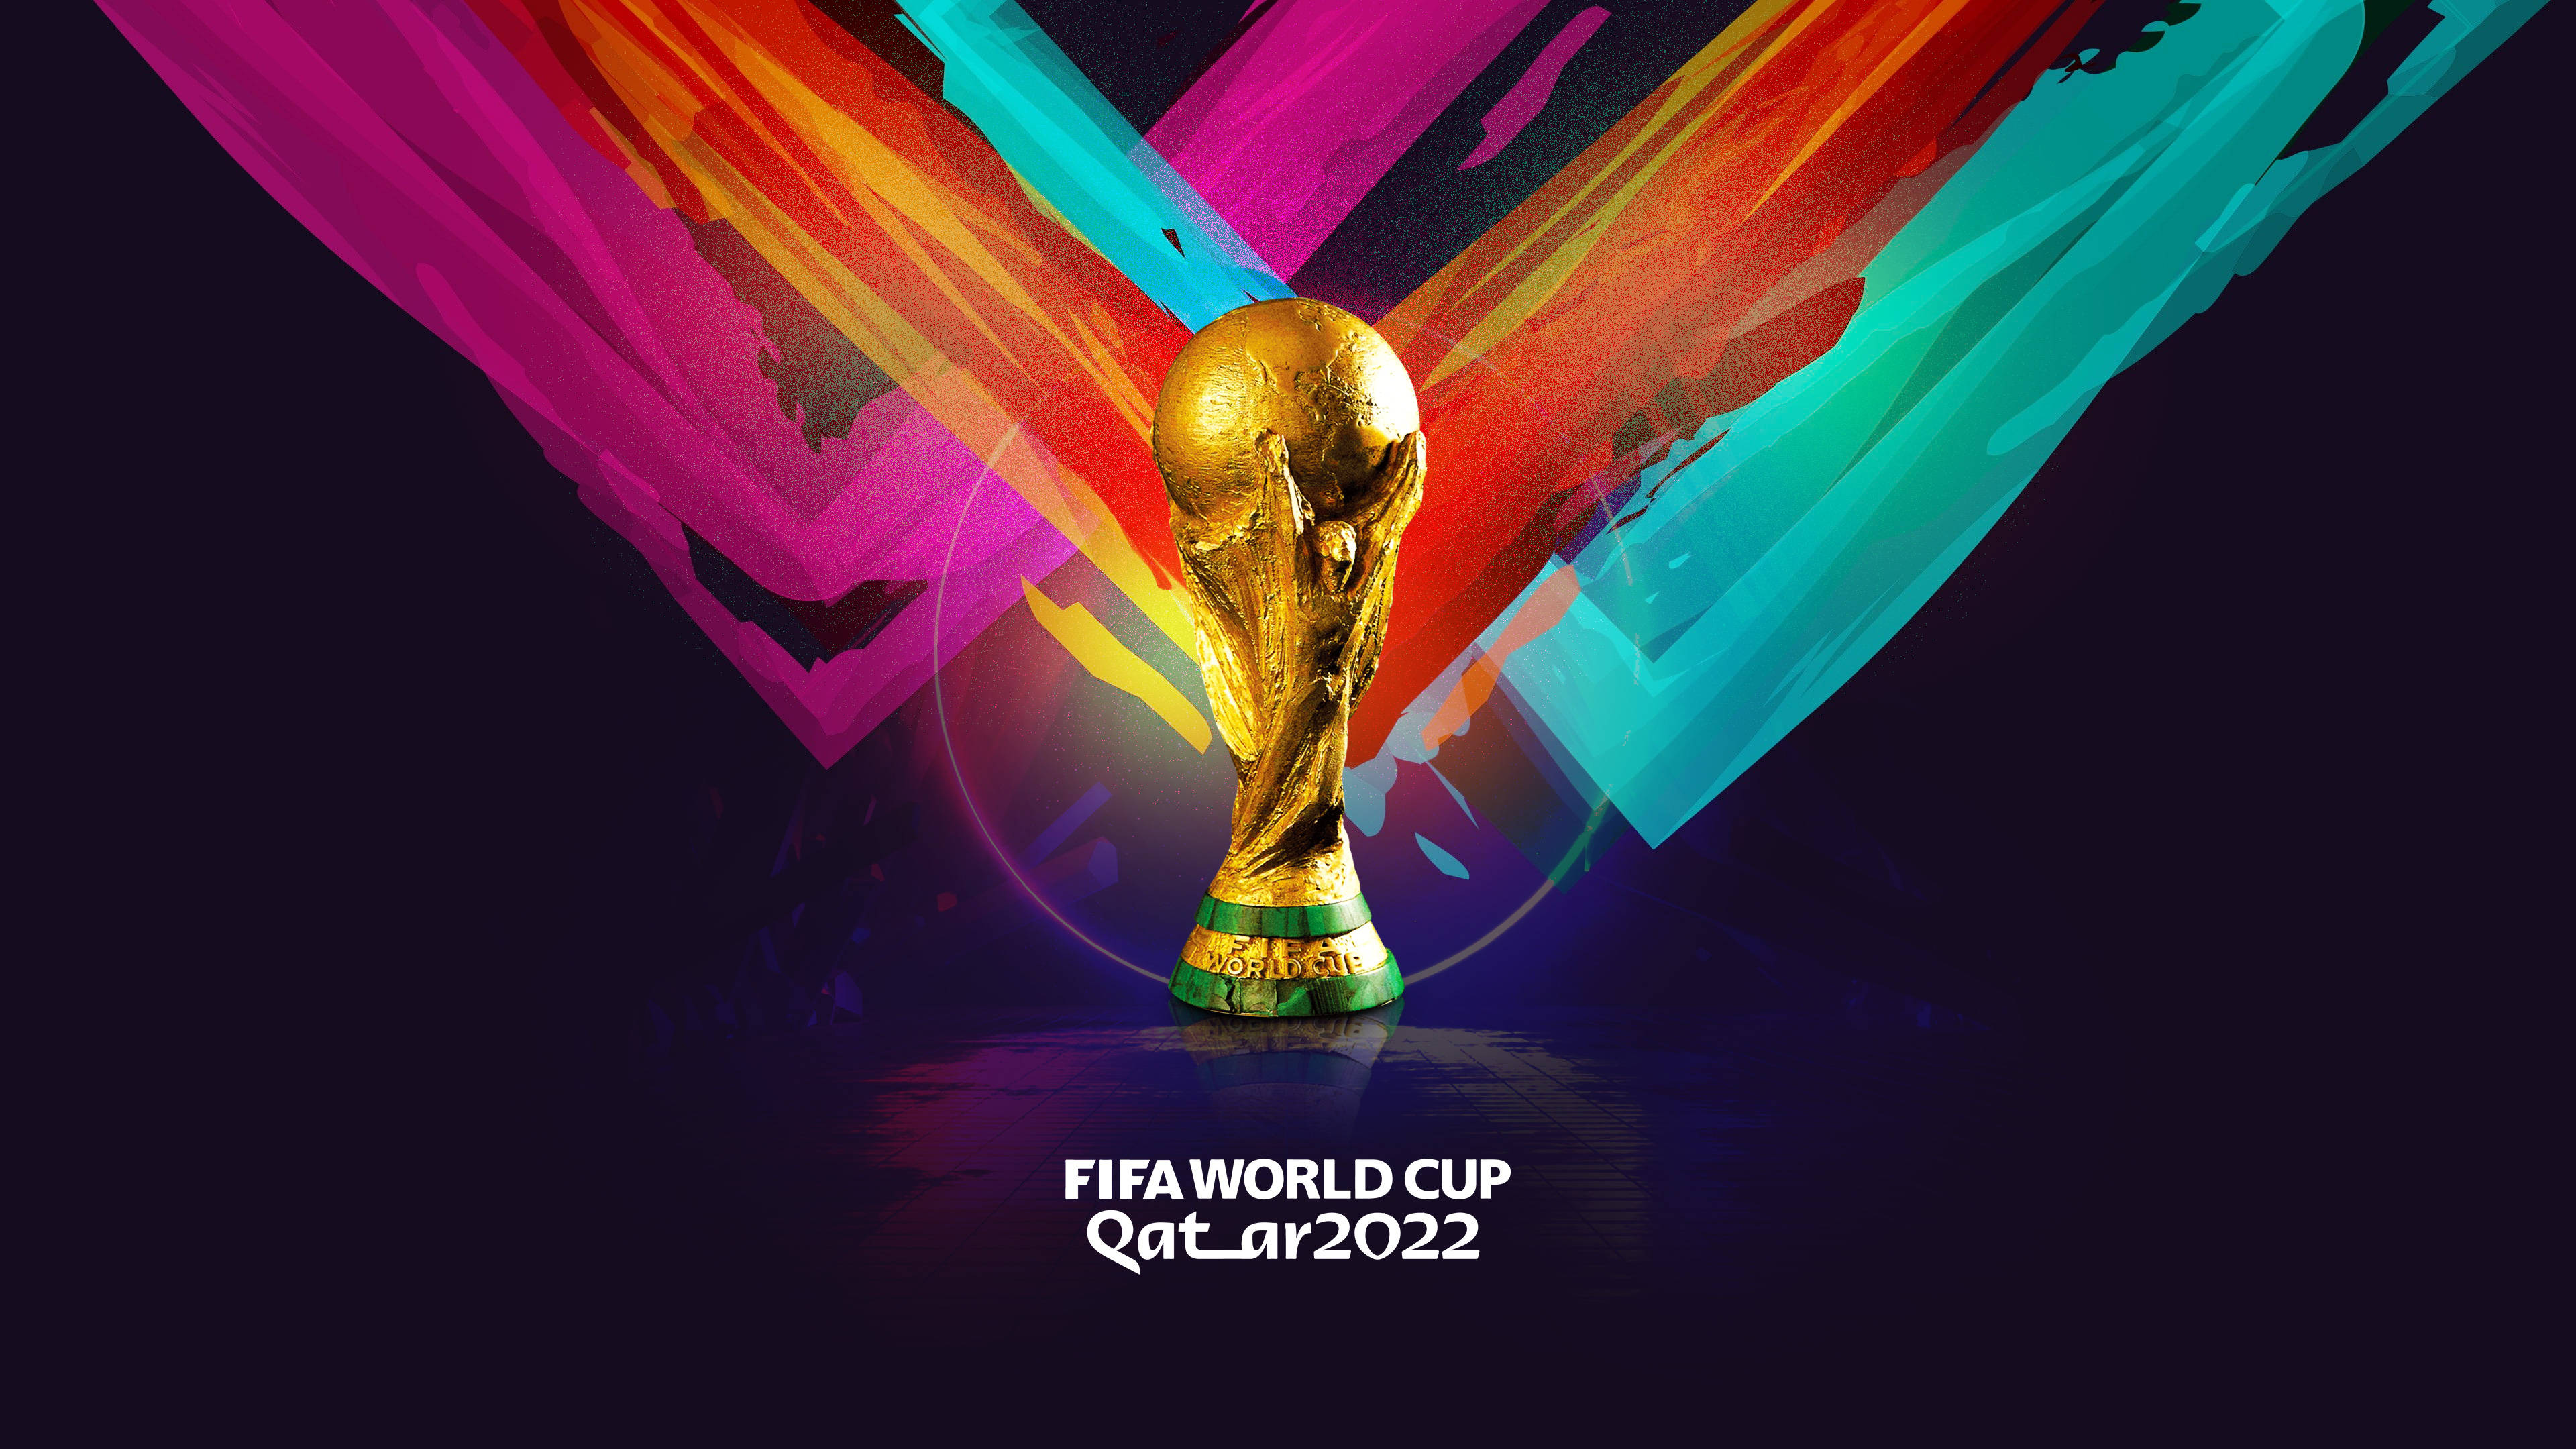 Fondos de pantalla Copa Mundial de la FIFA Catar 2022